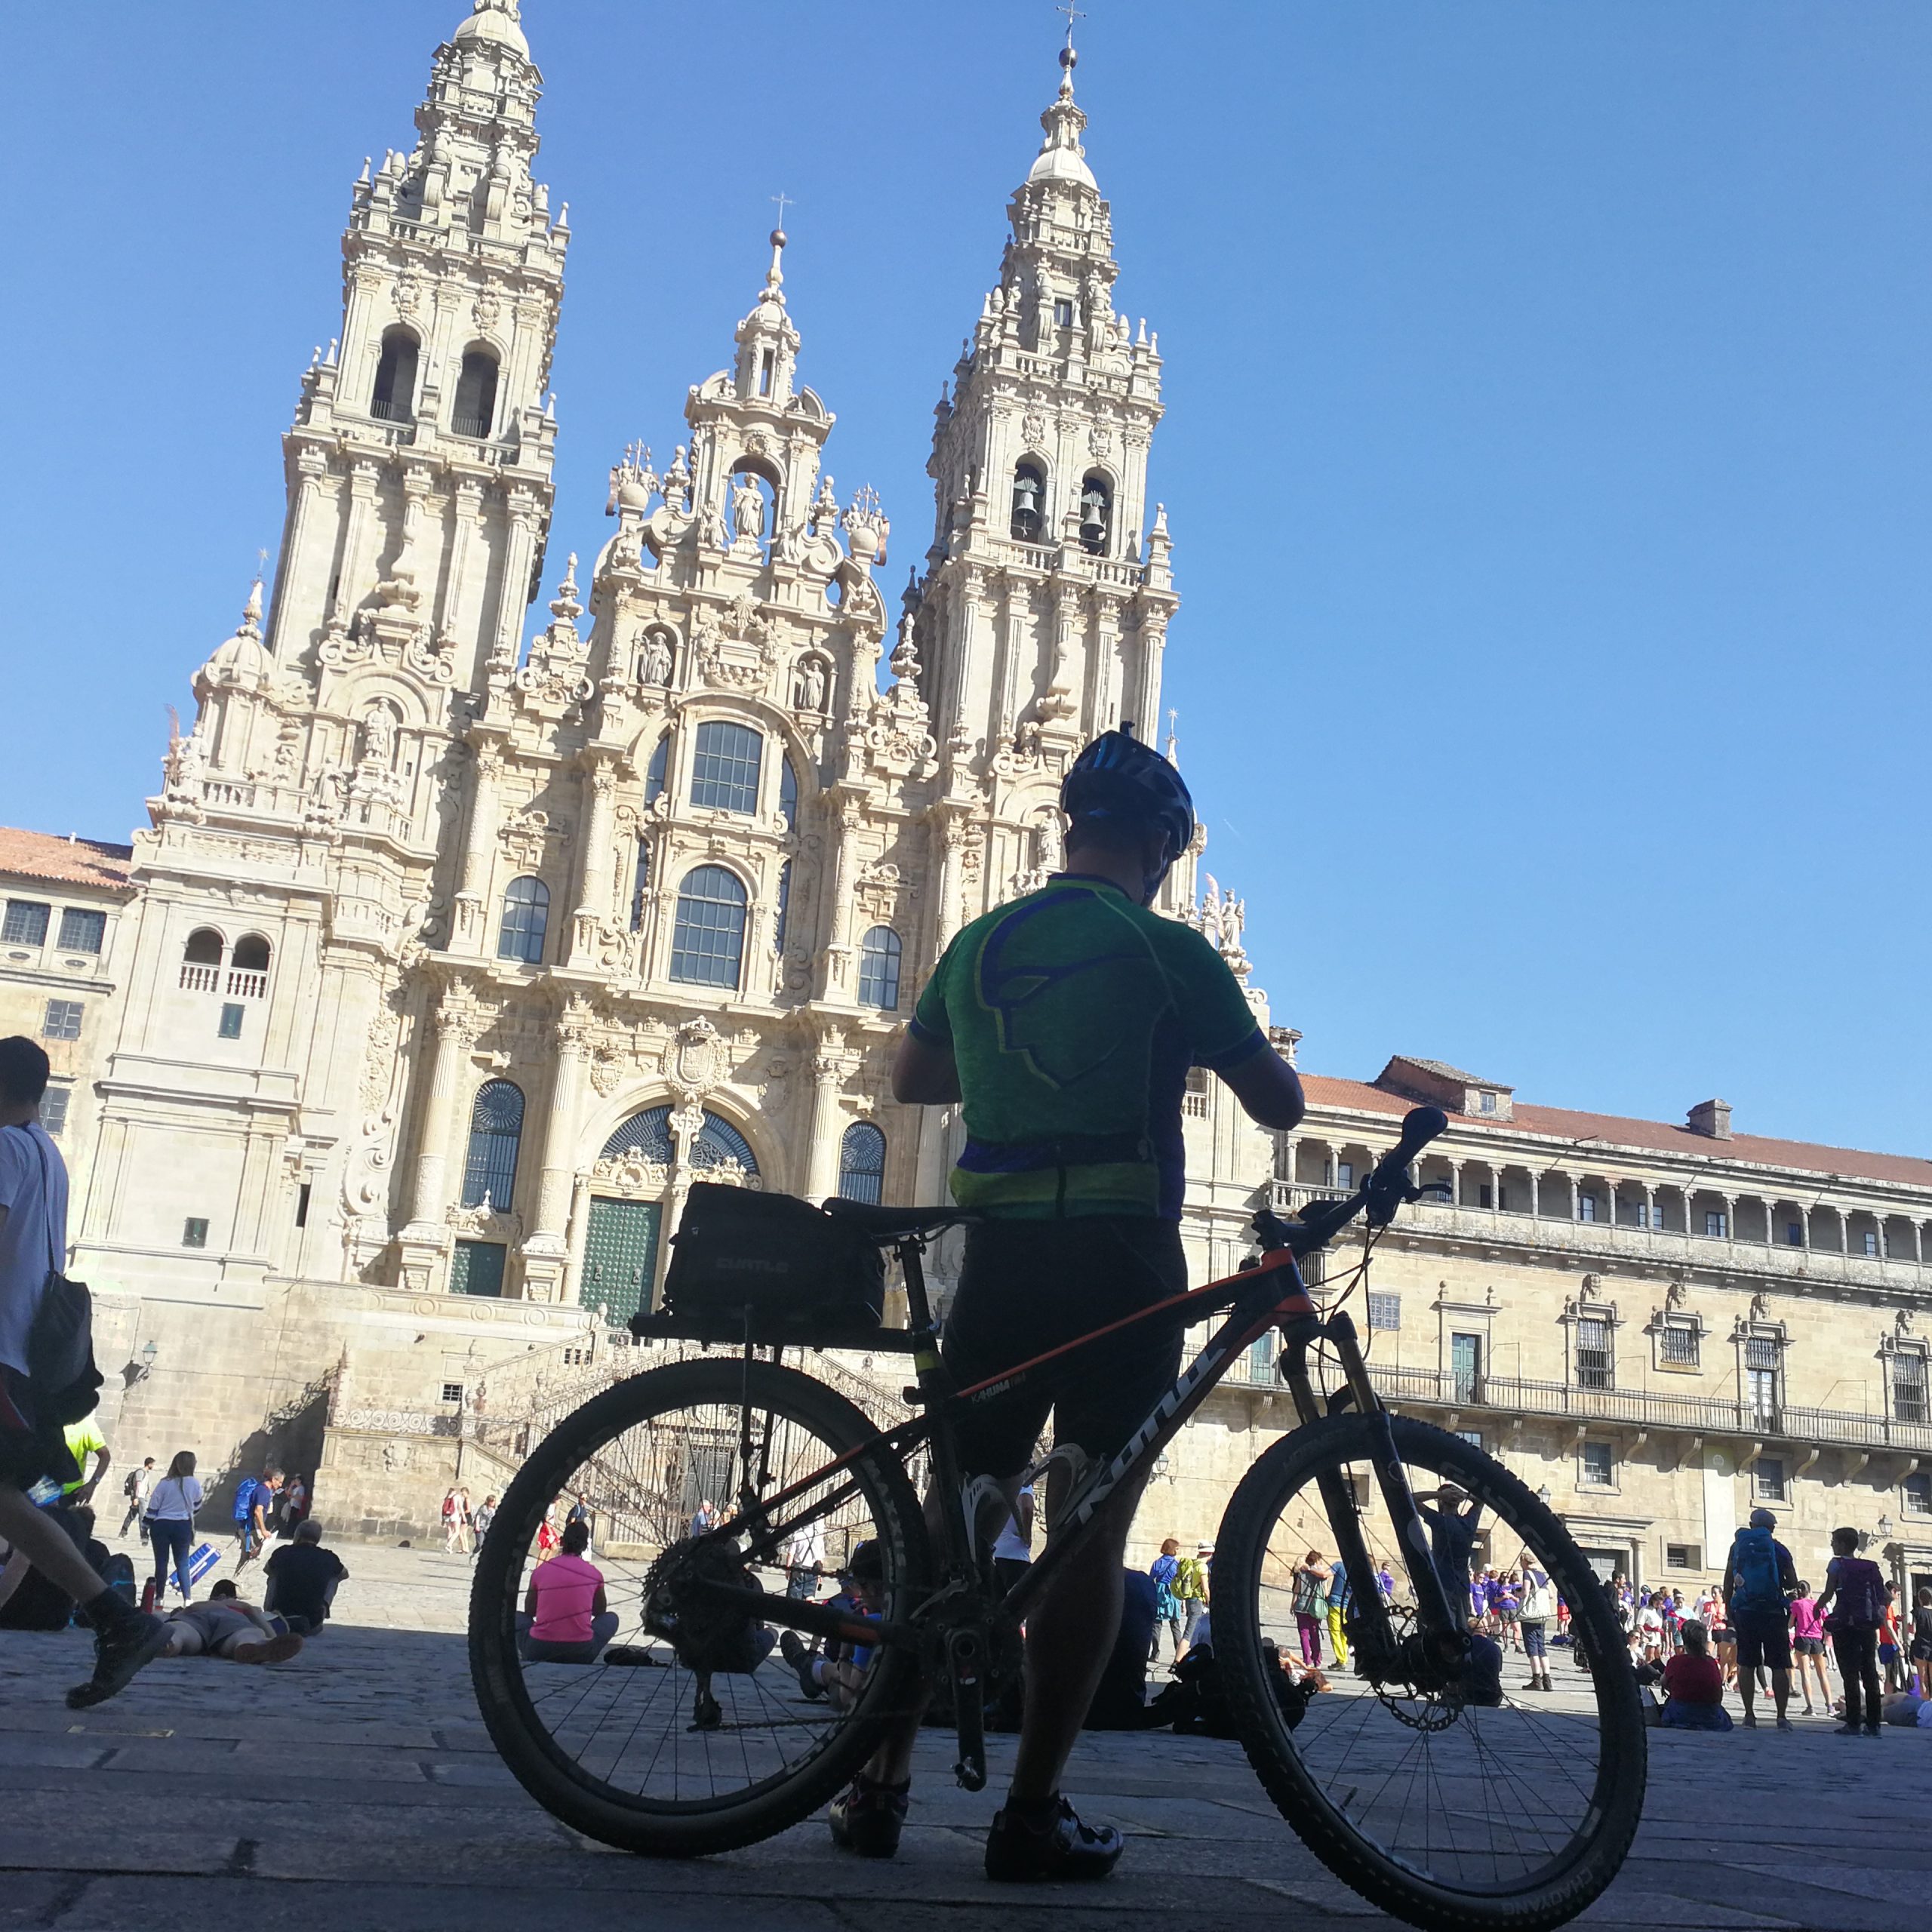 Day 7: Caldas de Reis - Santiago de Compostela 45 km